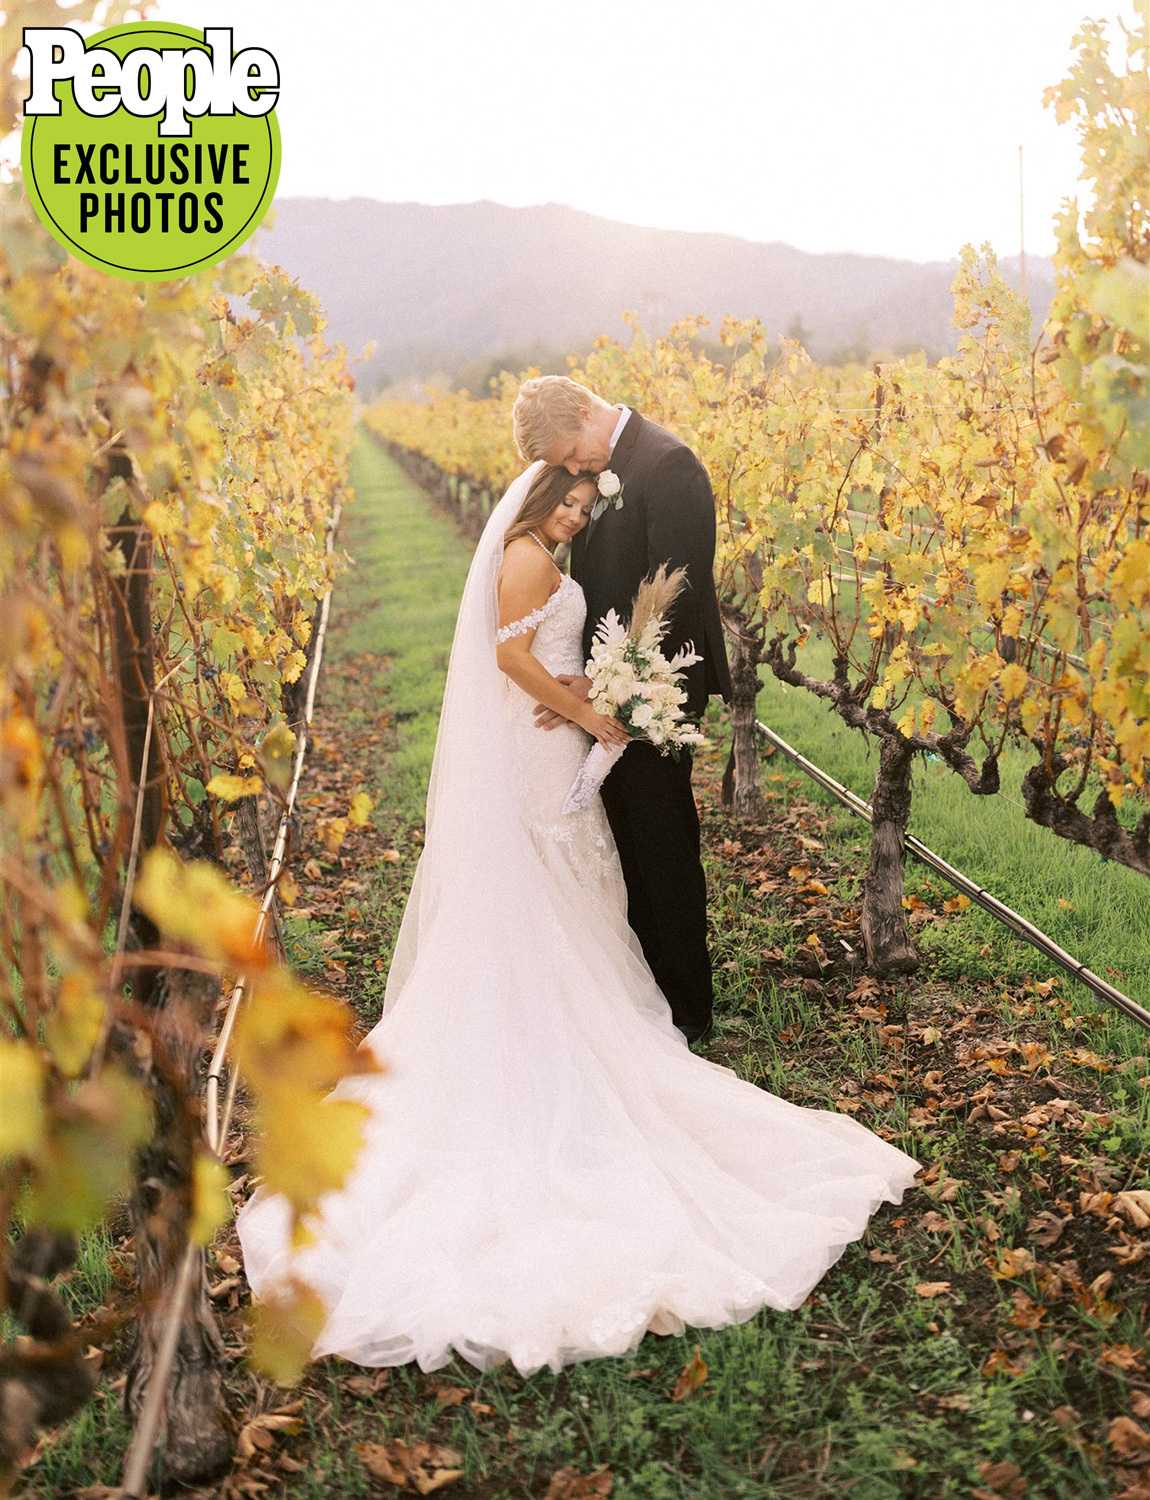 As Seen In People: Kristen Marries Austin Aaron in Exclusive Lovella. Desktop Image